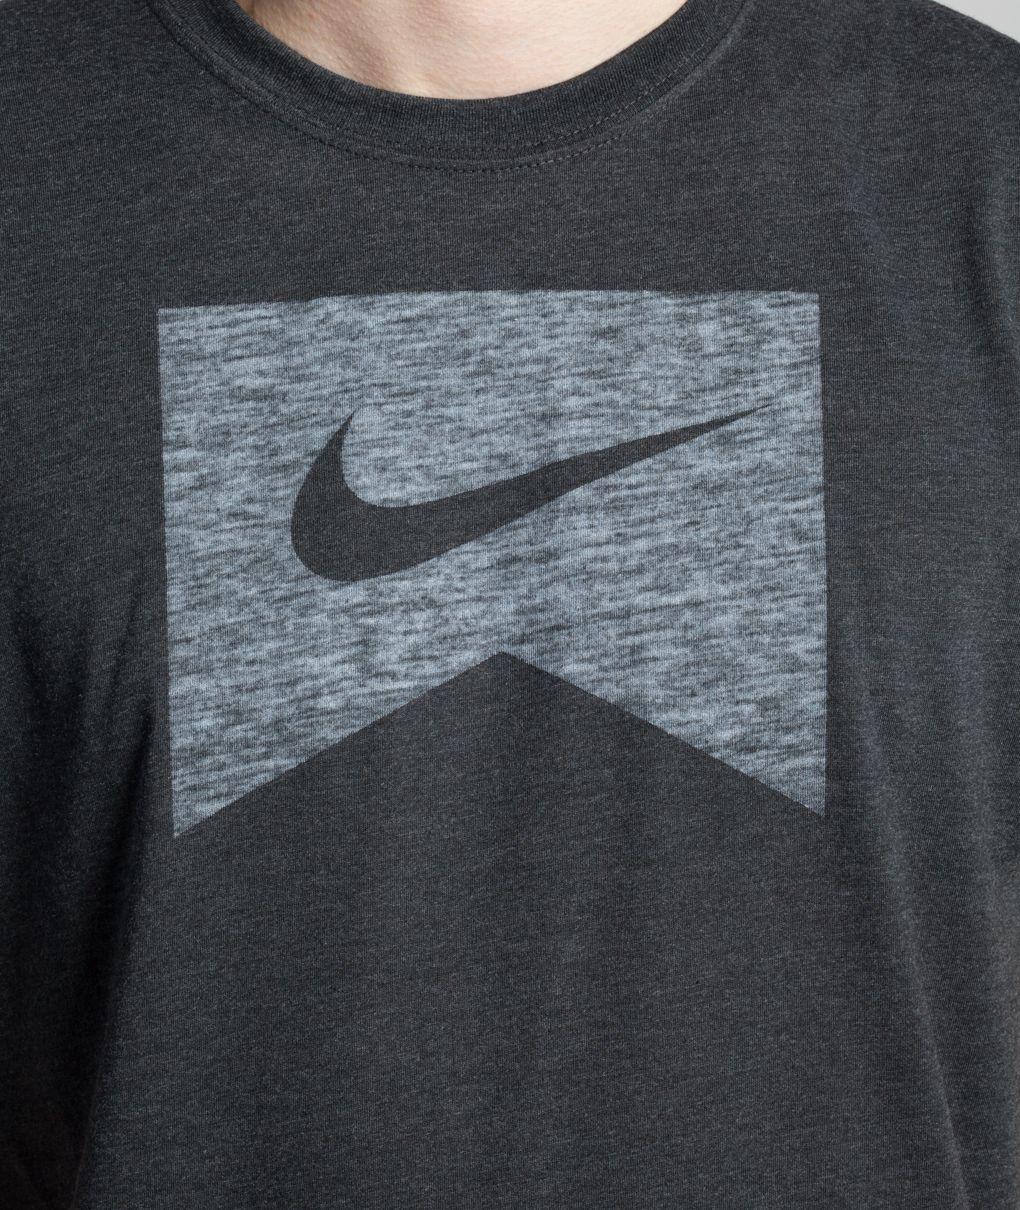 Nike Ribbon Logo - Skateboarding, Shoes & Clothing Online Store Shirts S S